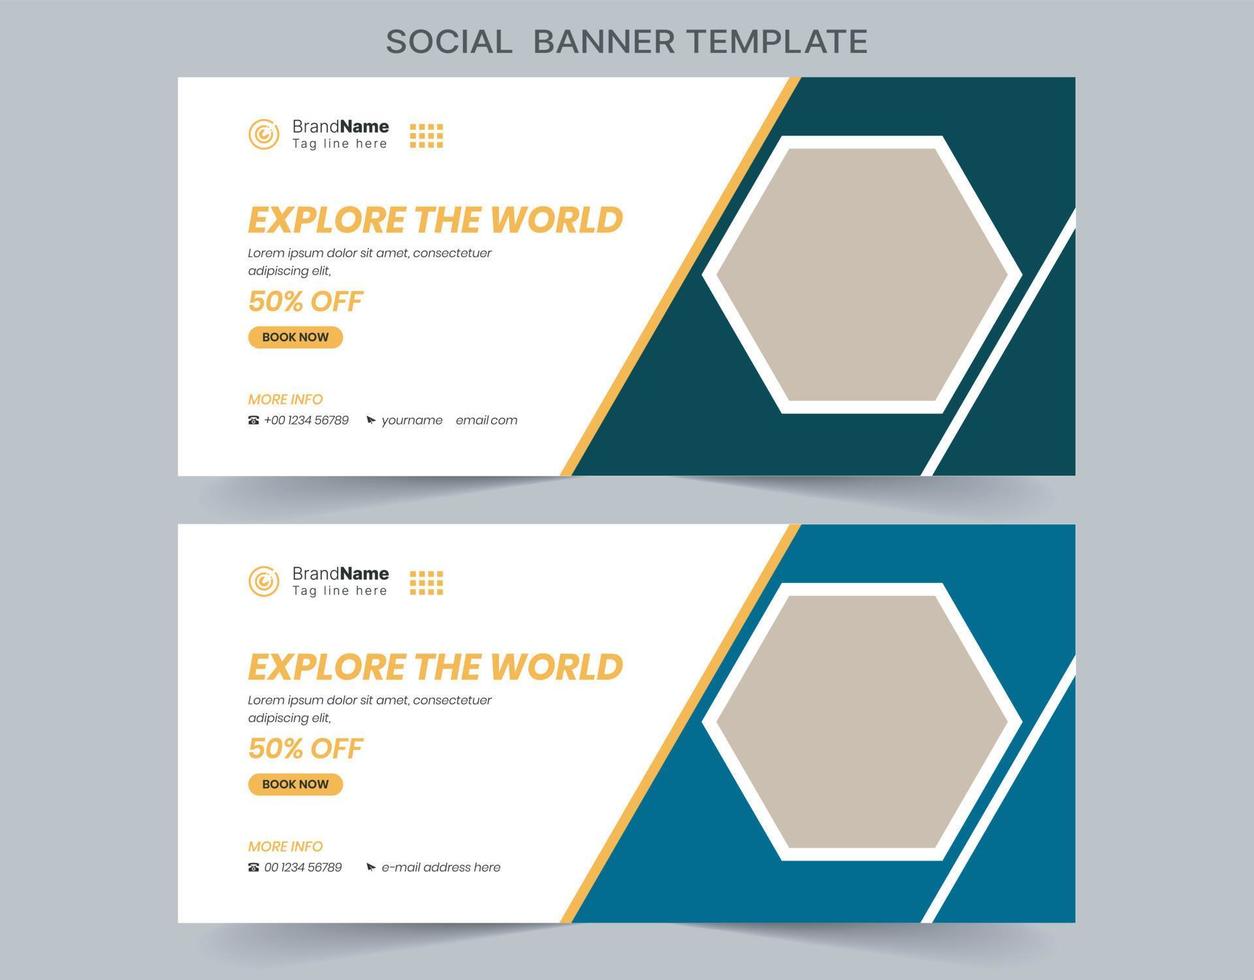 Social Media Marketing Web banner, Digital Marketing Cover Banner Template Design vector